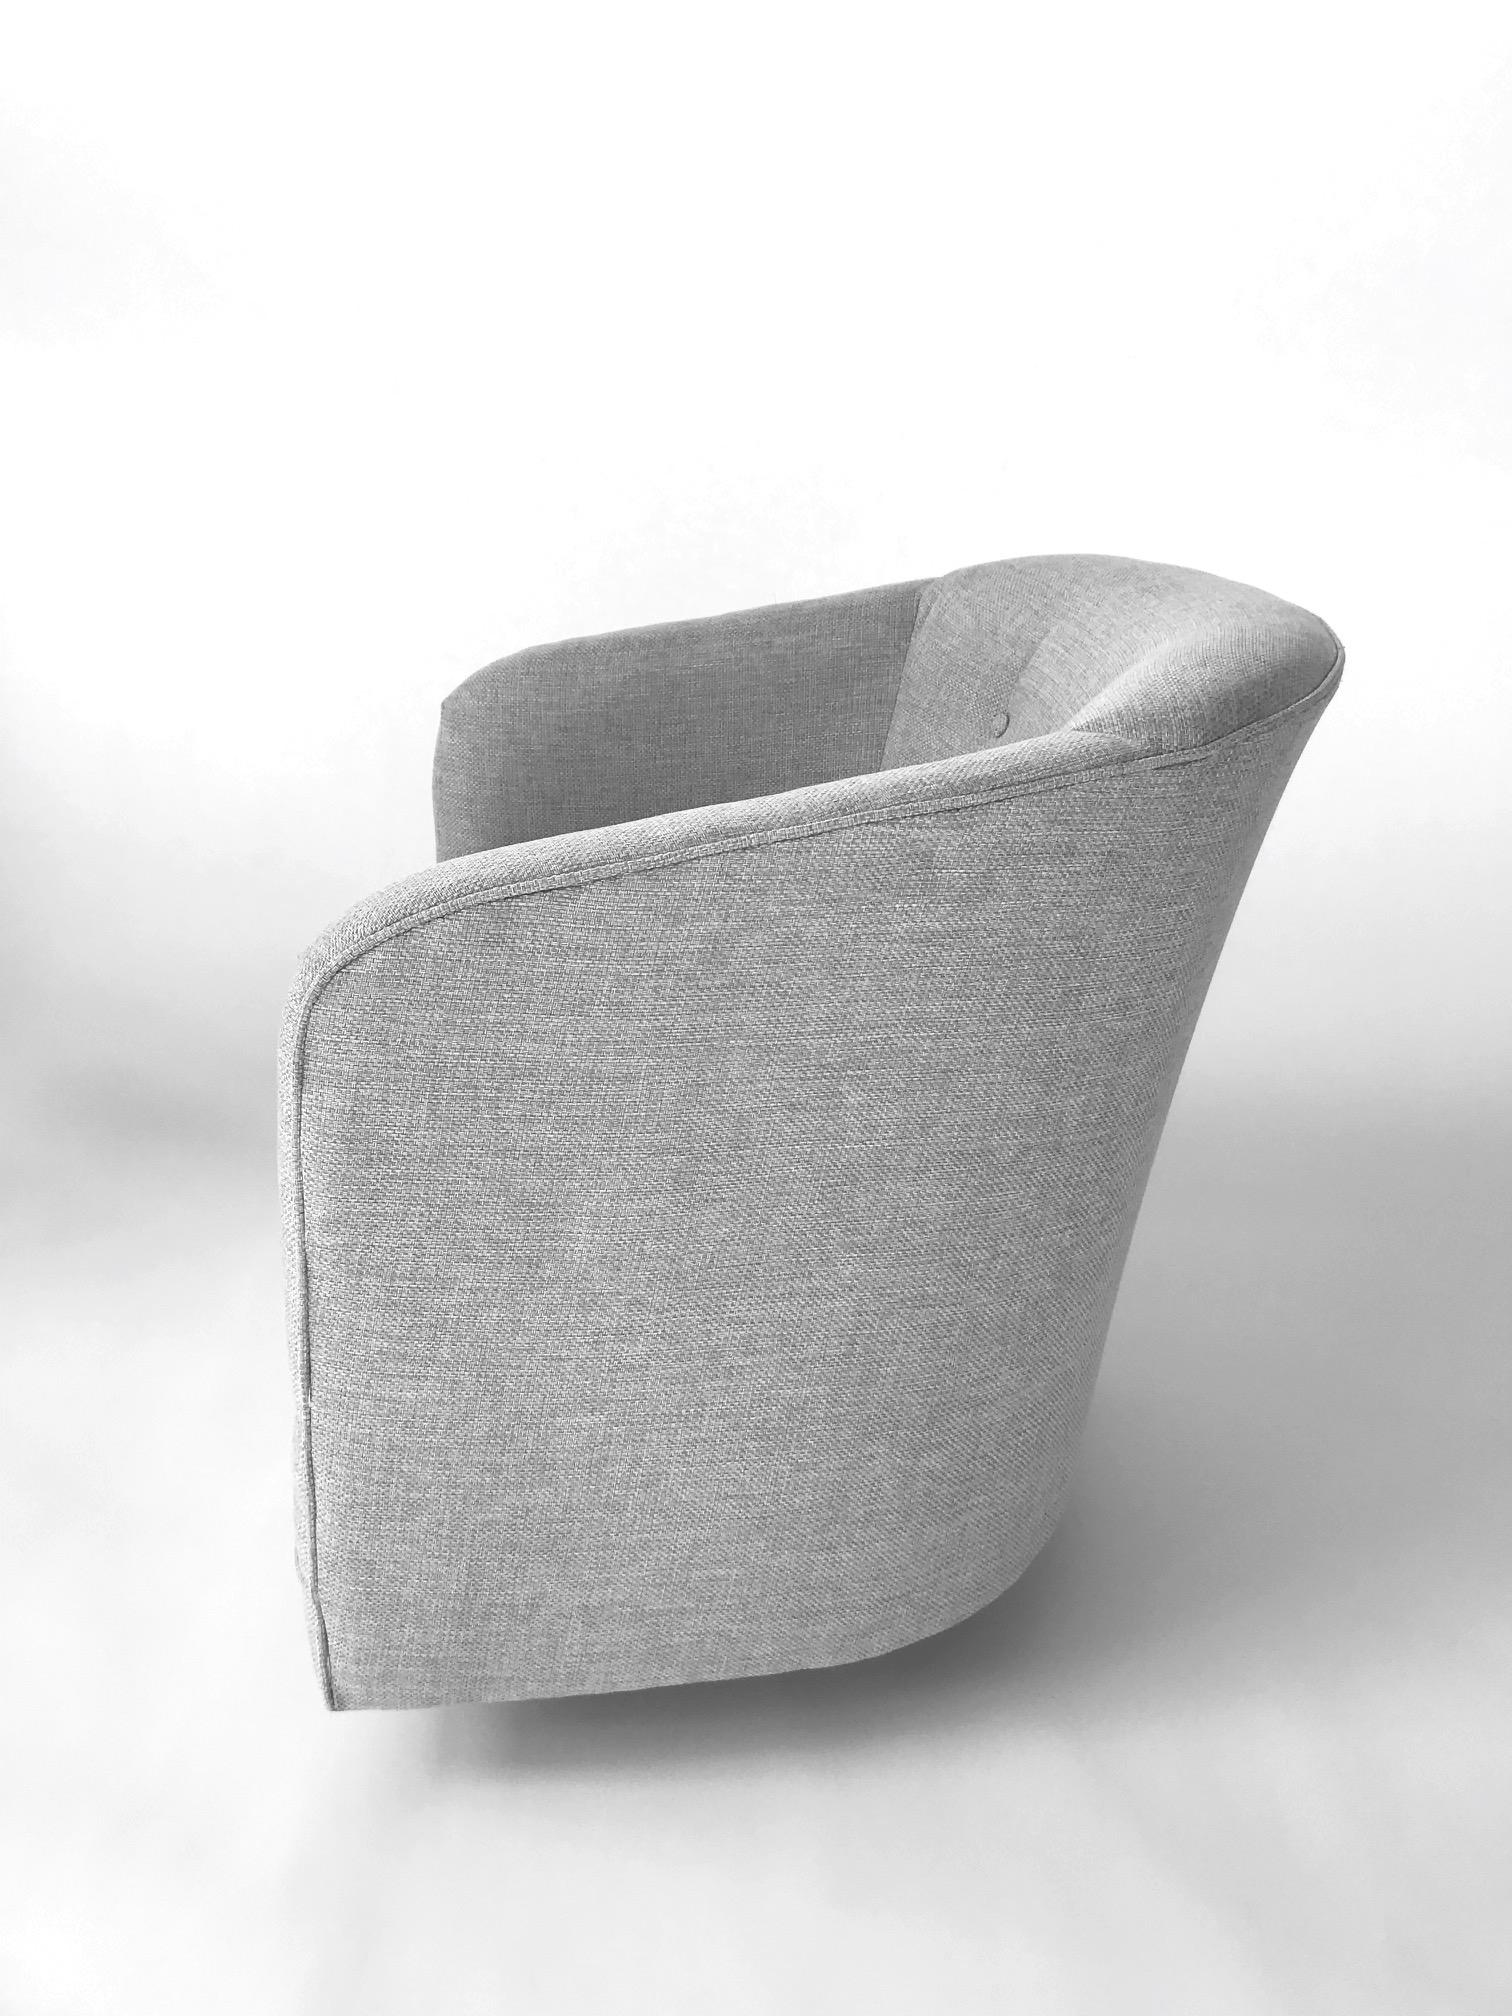 1970s Woven Upholstered Swivel Lounge Chair by Milo Baughman (Handgewebt)